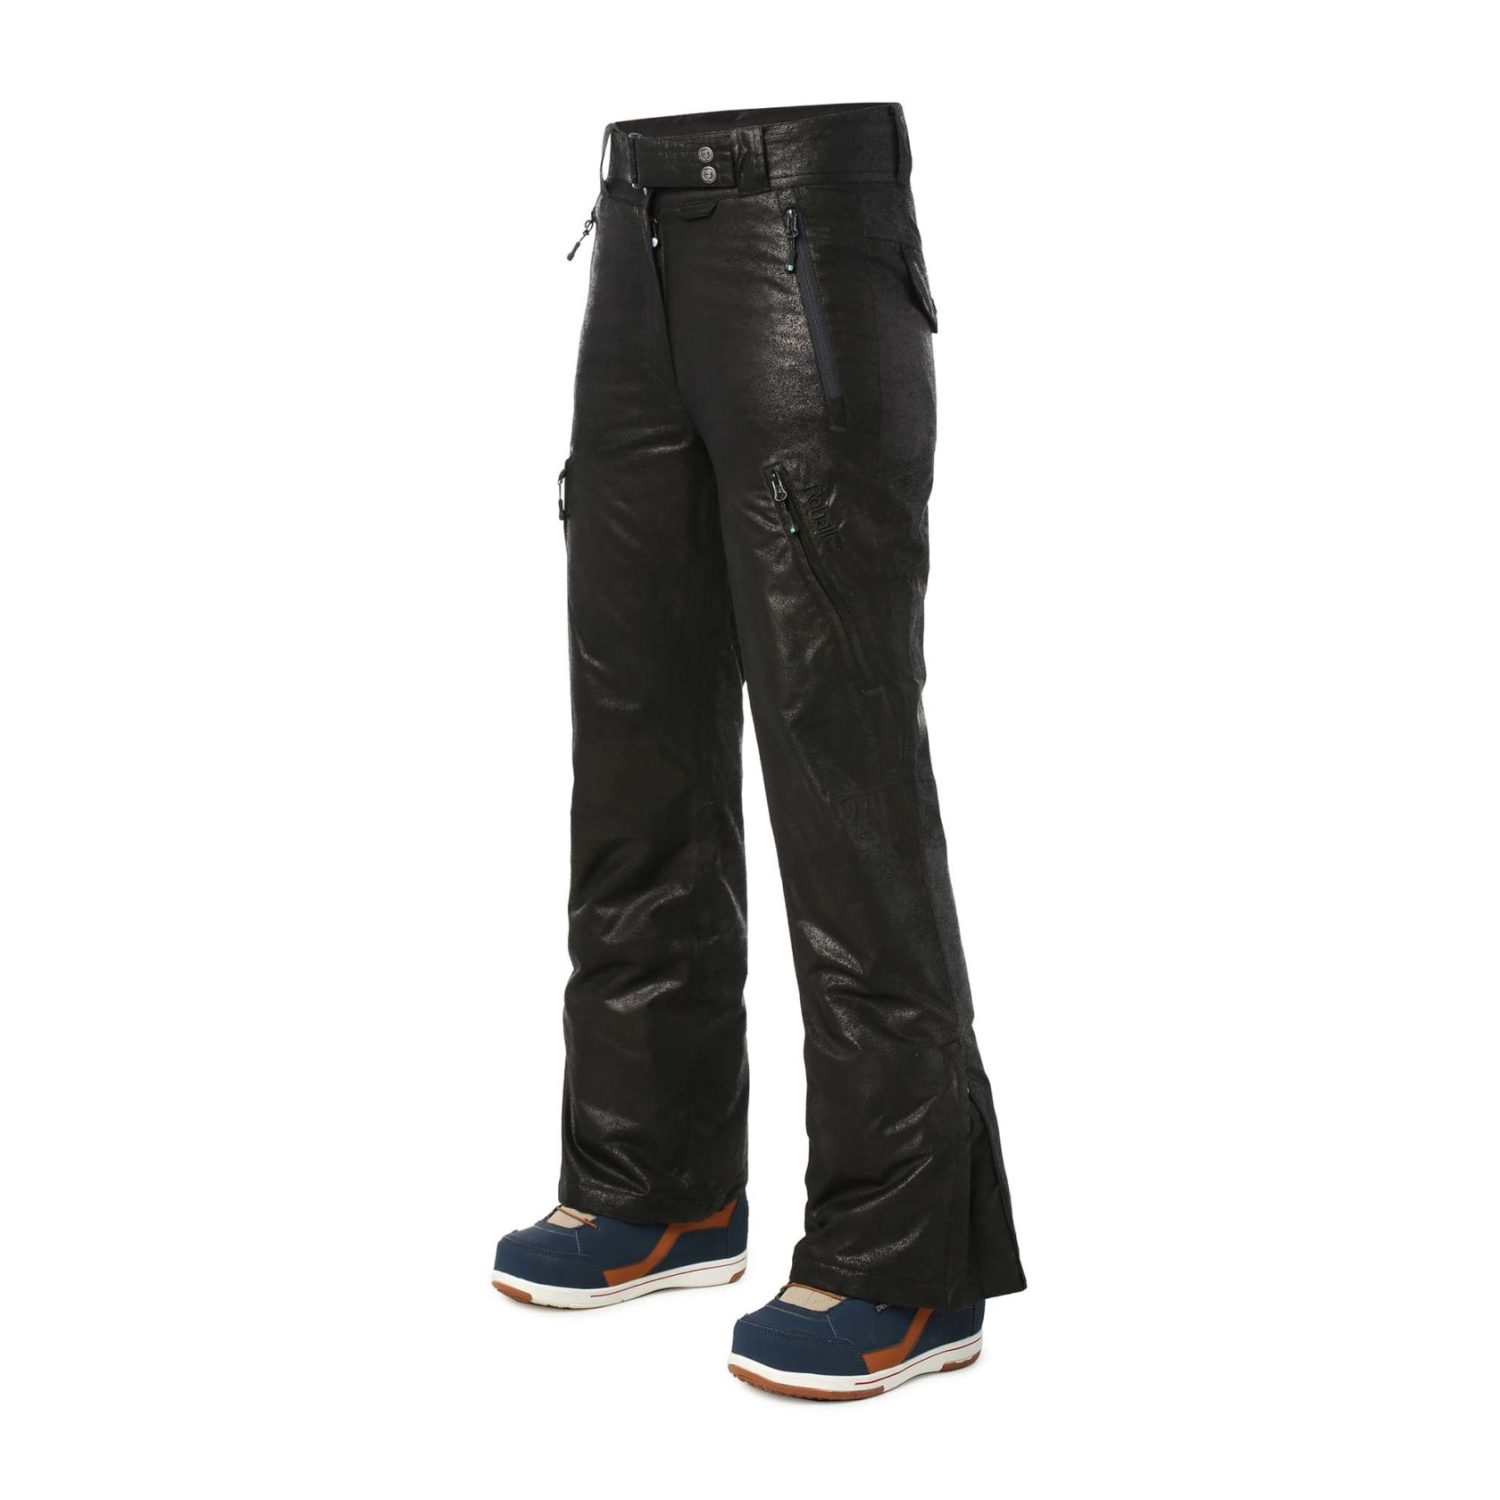 Штаны для сноуборда Rehall 16-17 Missy R Snowpant Black Leather, размер L - фото 1